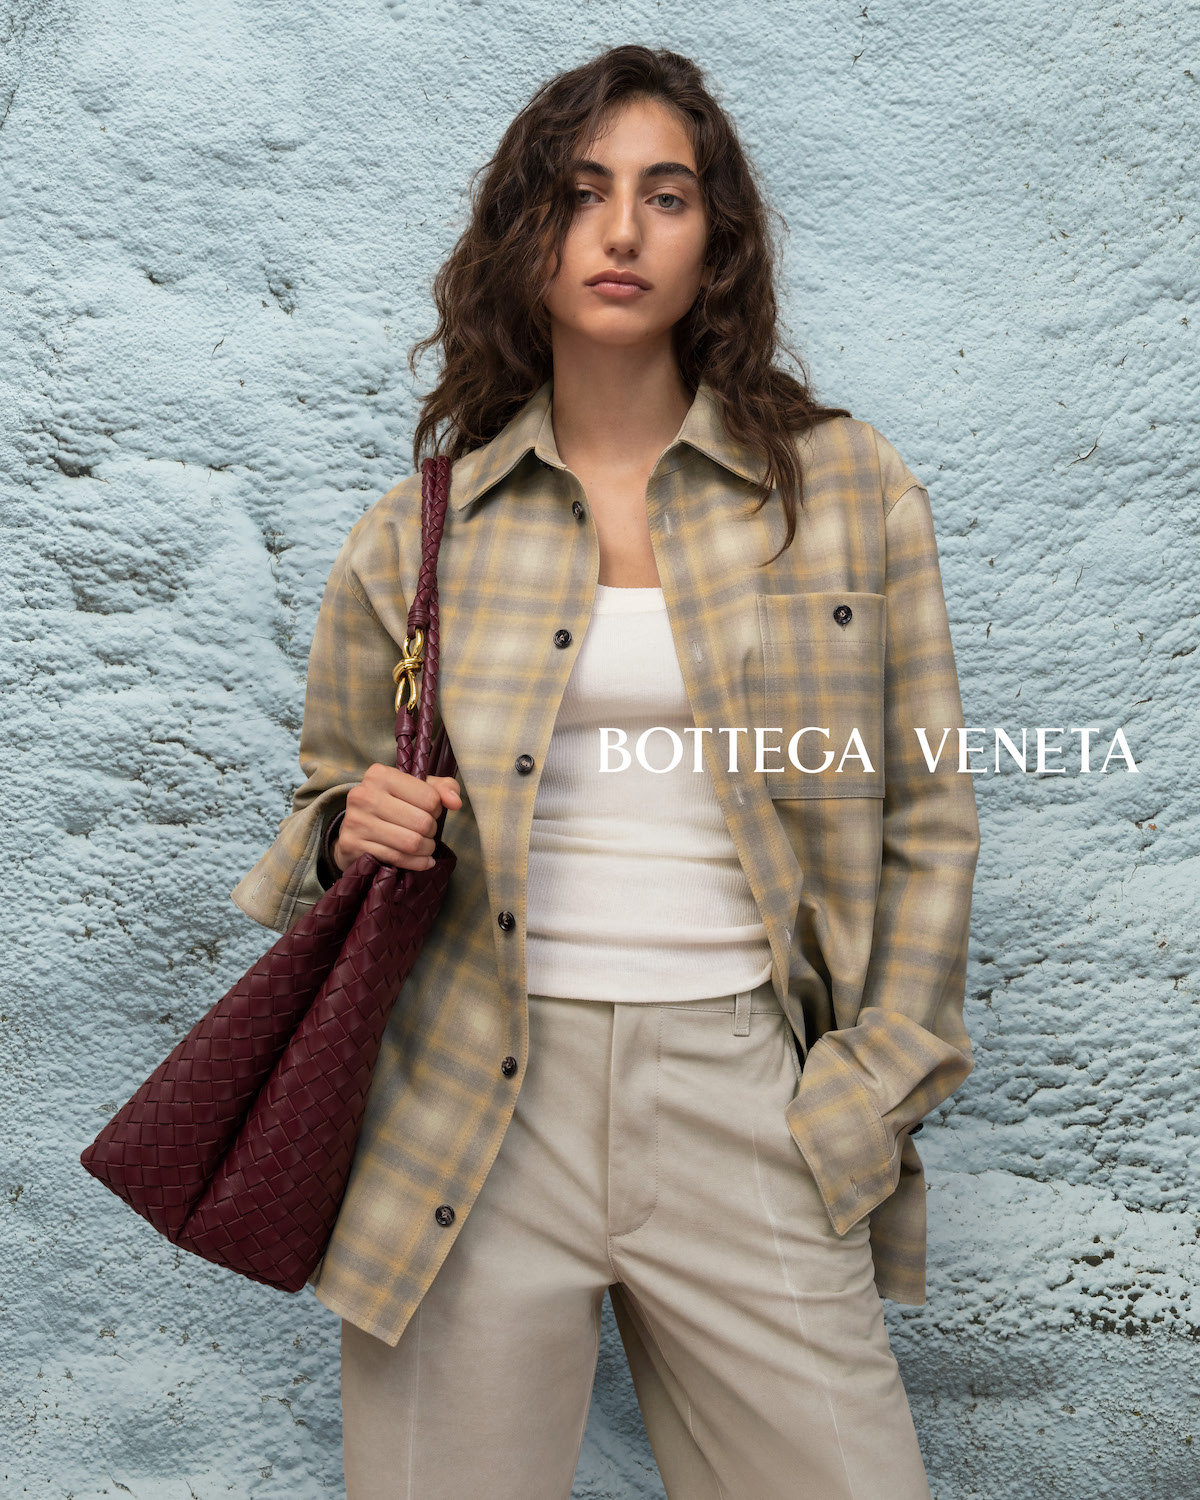 BOTTEGA VENETA SS23 campaign